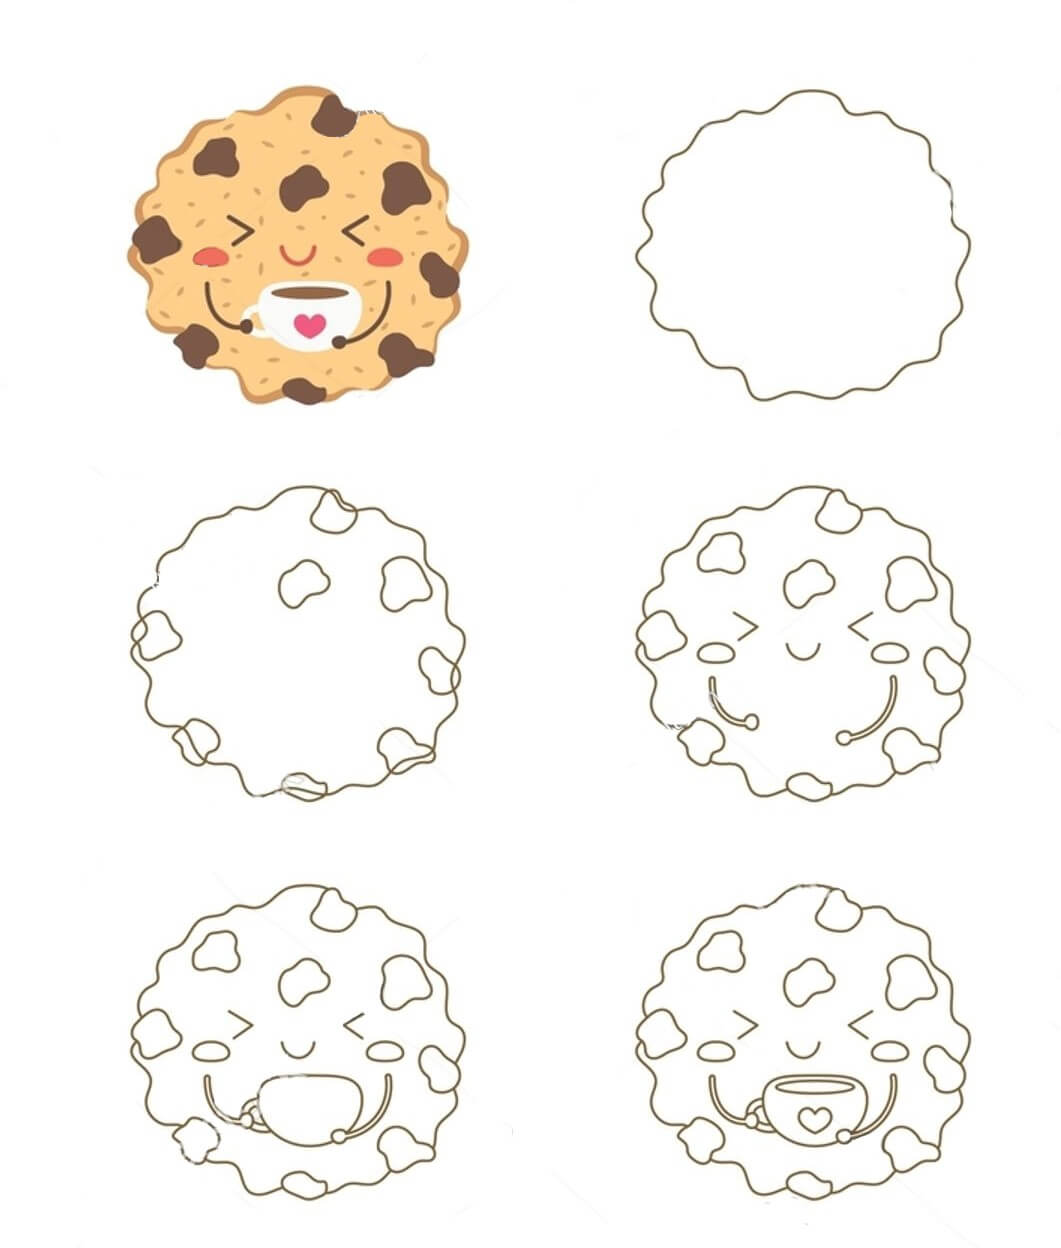 Cookies idea (11) Drawing Ideas